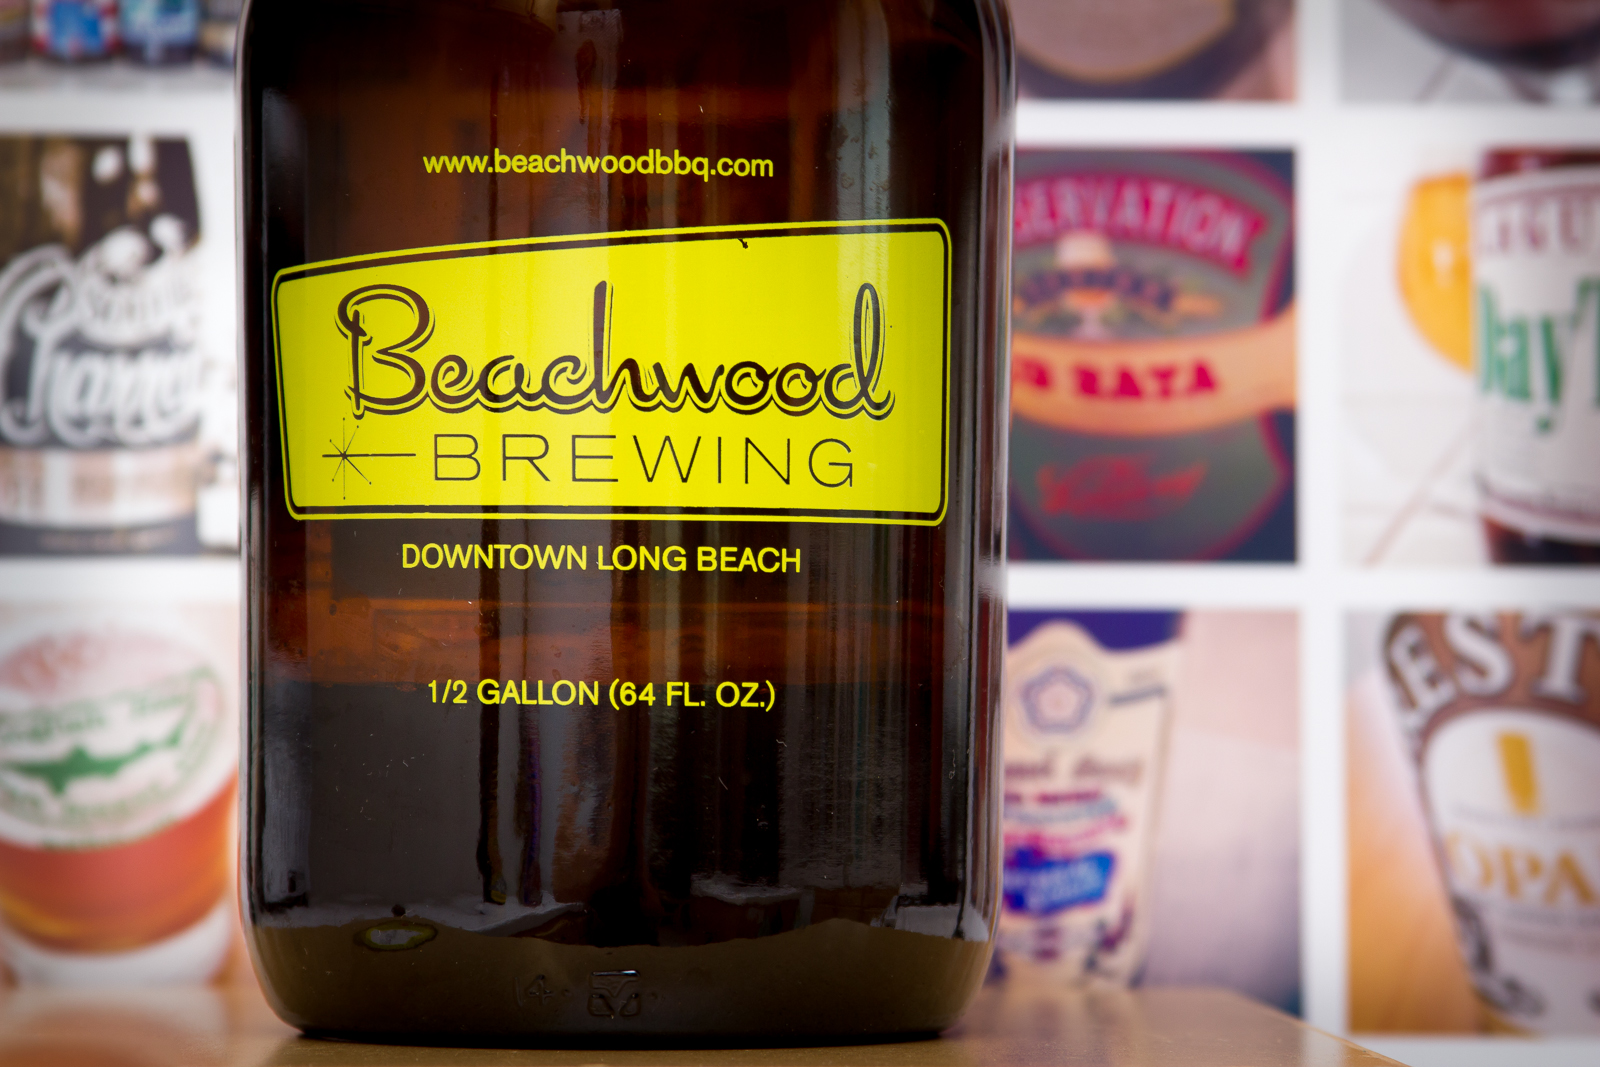 Beachwood BBQ & Brewing - Alpha Waves